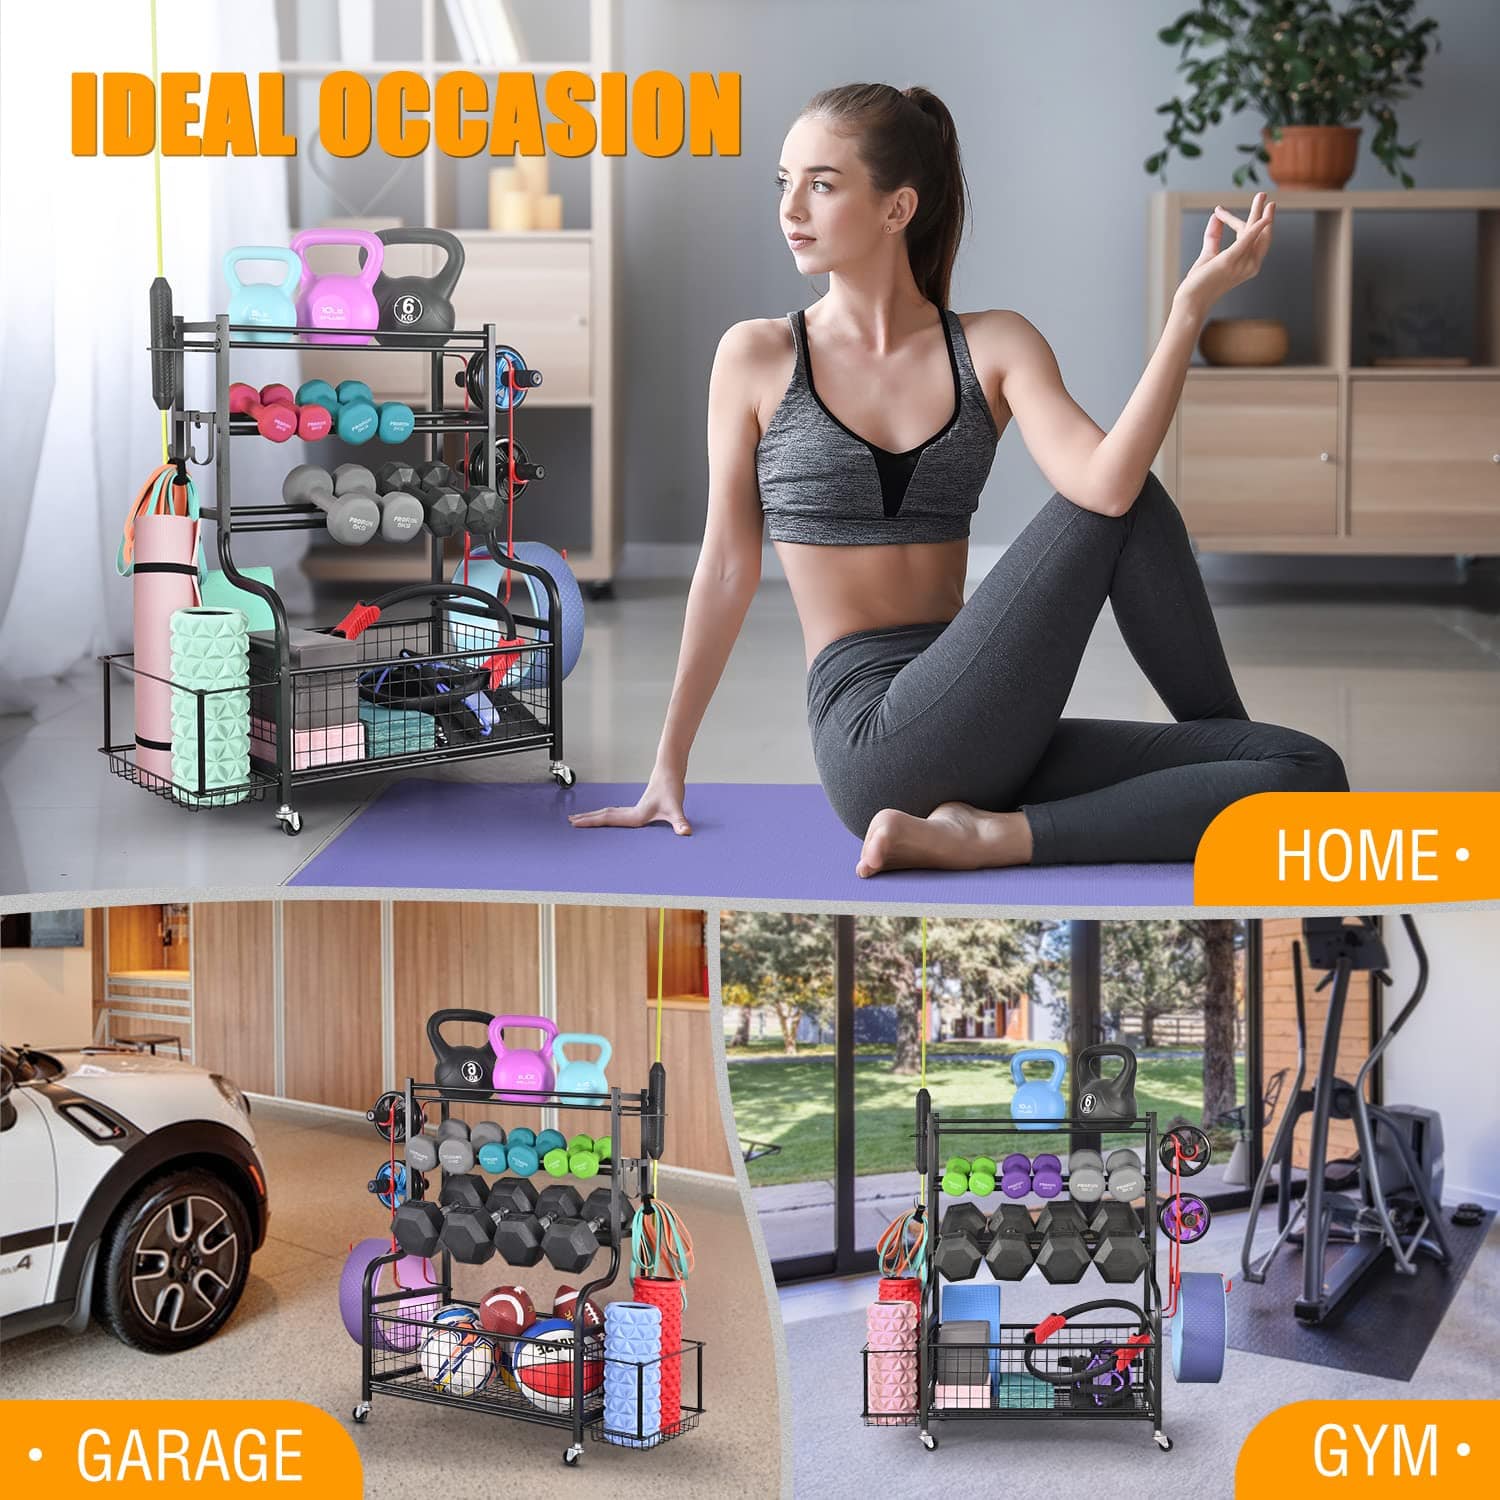 Mythinglogic Home Gym Equipment Storage Organizer Yoga Mat Holder